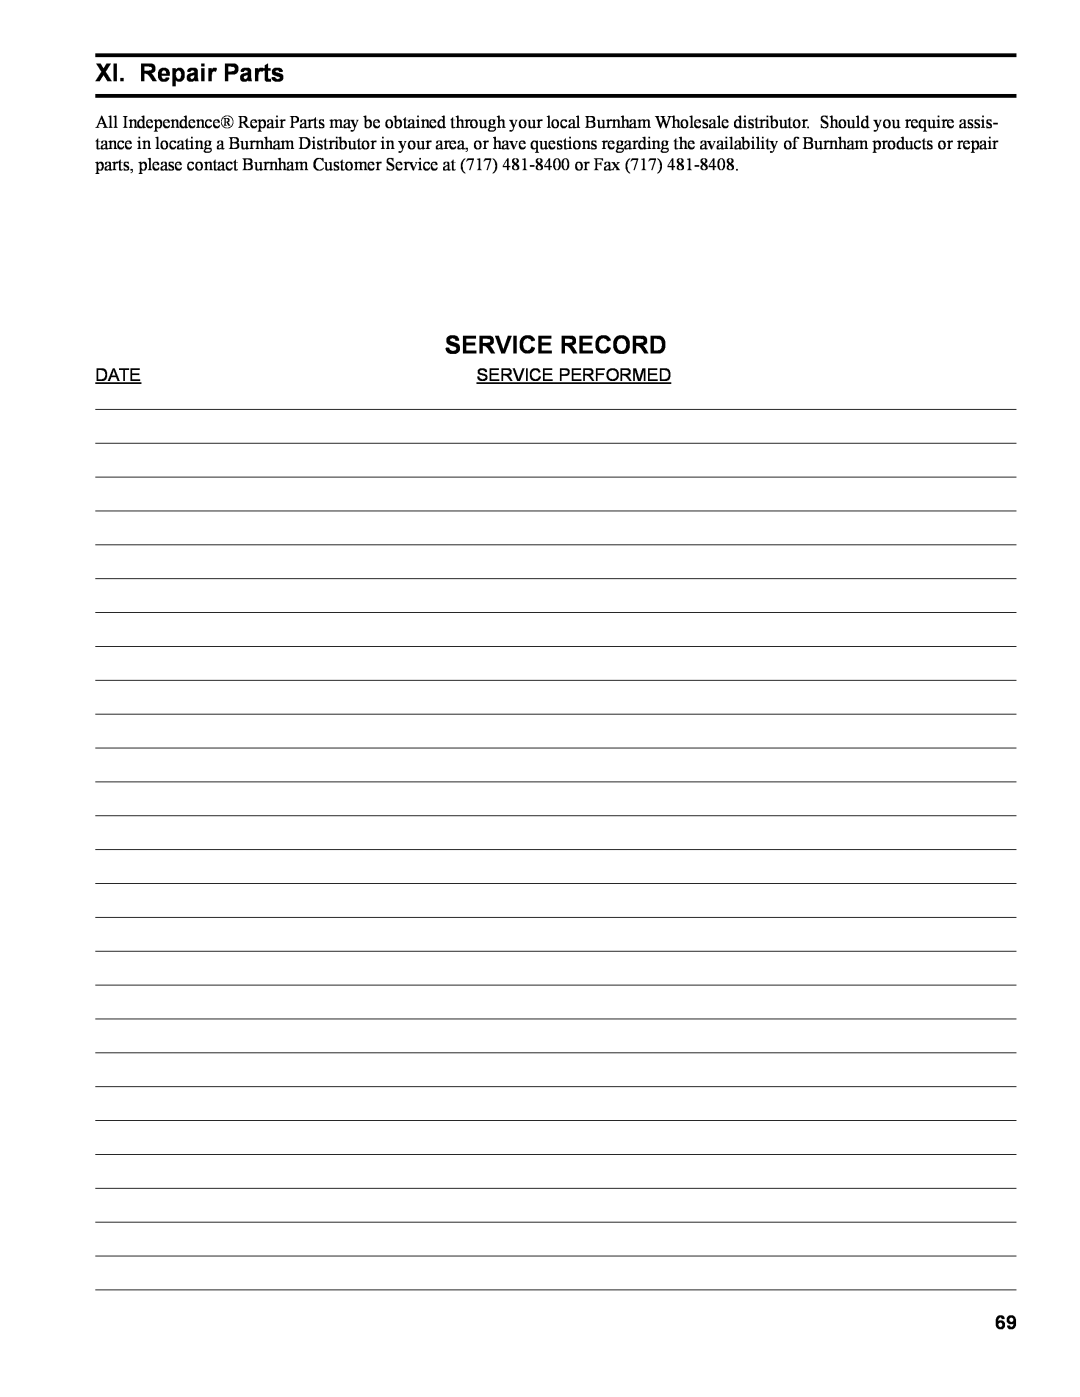 Burnham IN10 manual XI. Repair Parts, Service Record, Date, Service Performed 